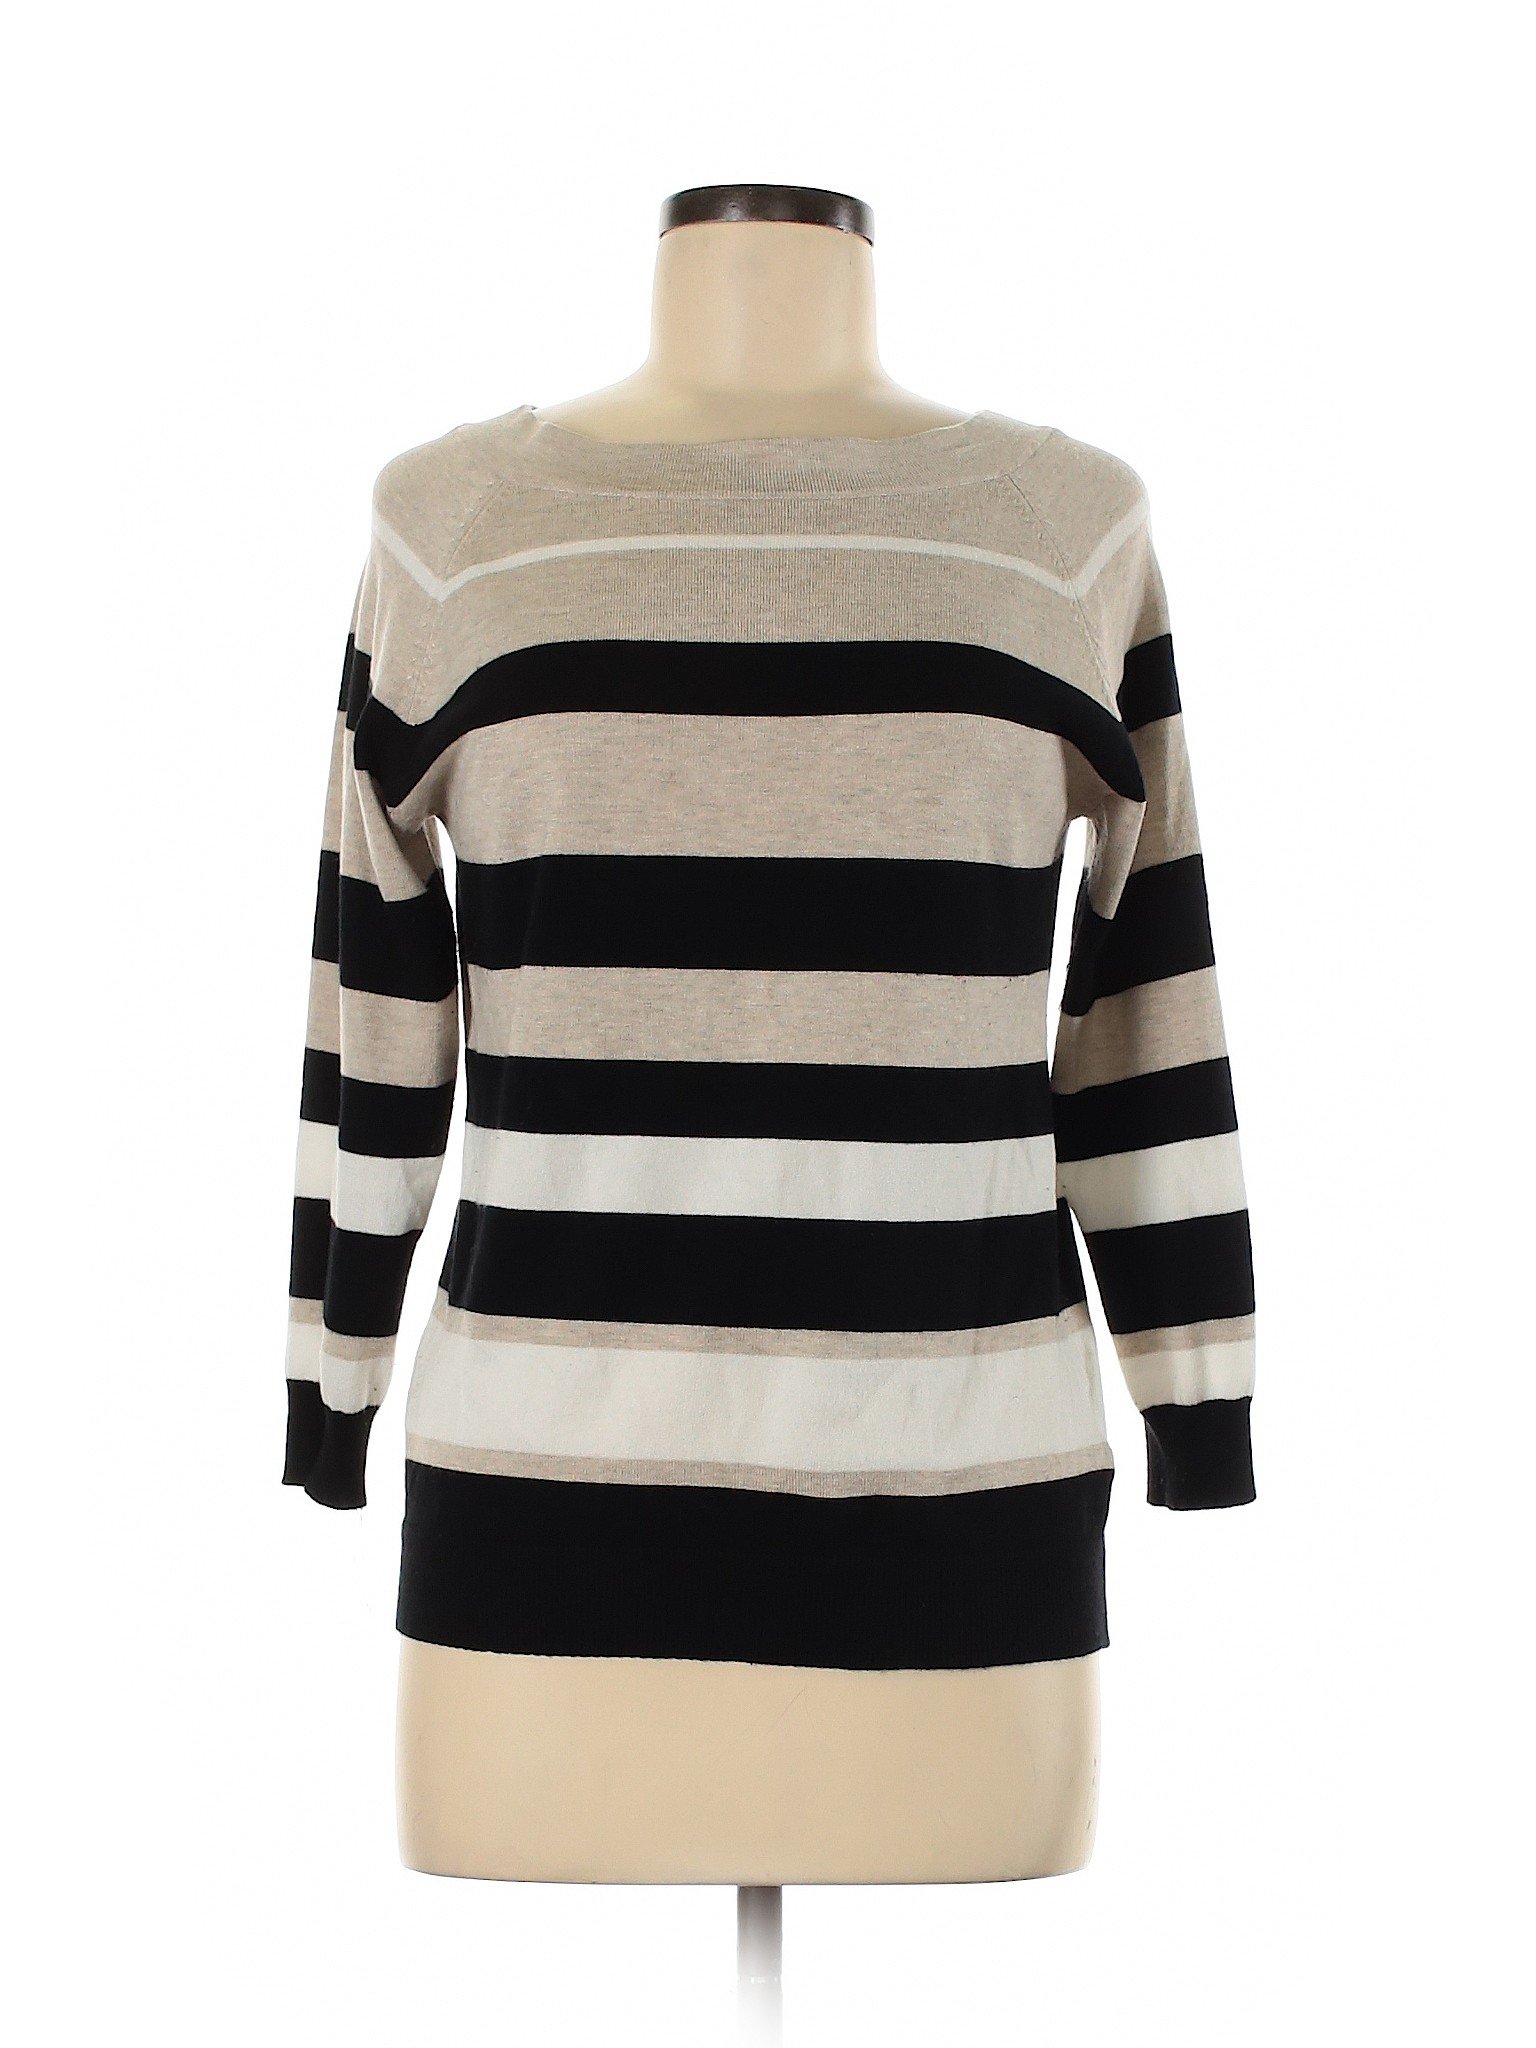 Joseph A. Women Brown Pullover Sweater M | eBay